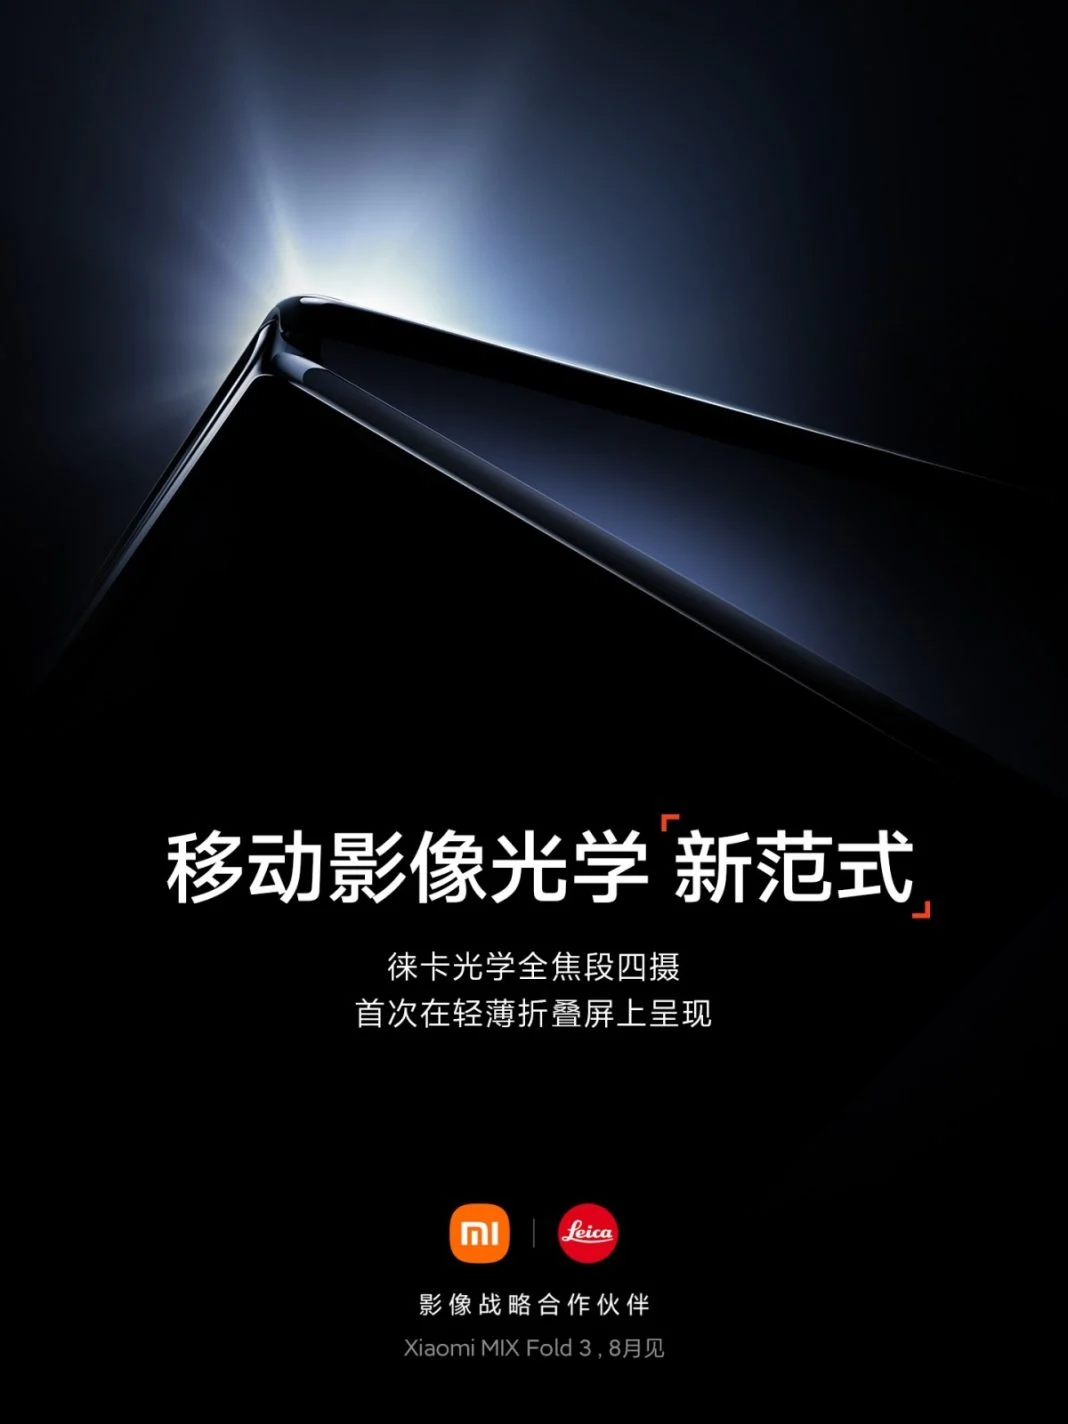 Xiaomi Mix Fold 3'ten şaşırtan kamera detayı!